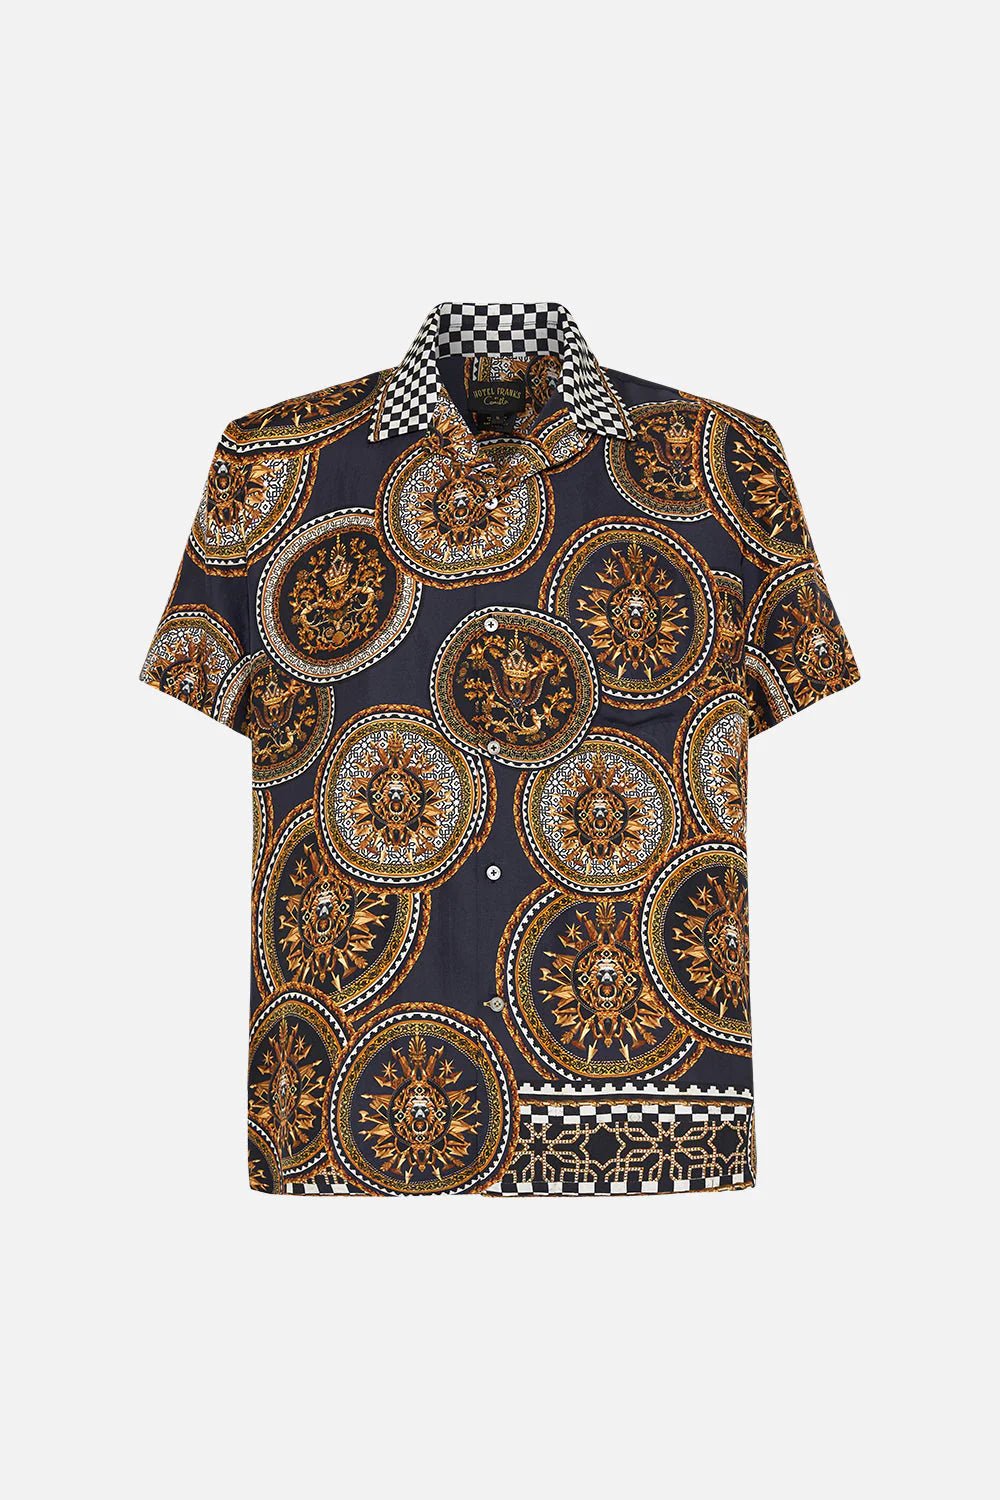 CAMILLA - Short Sleeve Camp Collared Shirt Duomo Kaleidoi - Pinkhill, Darwin boutique, Australian high end fashion, Darwin Fashion